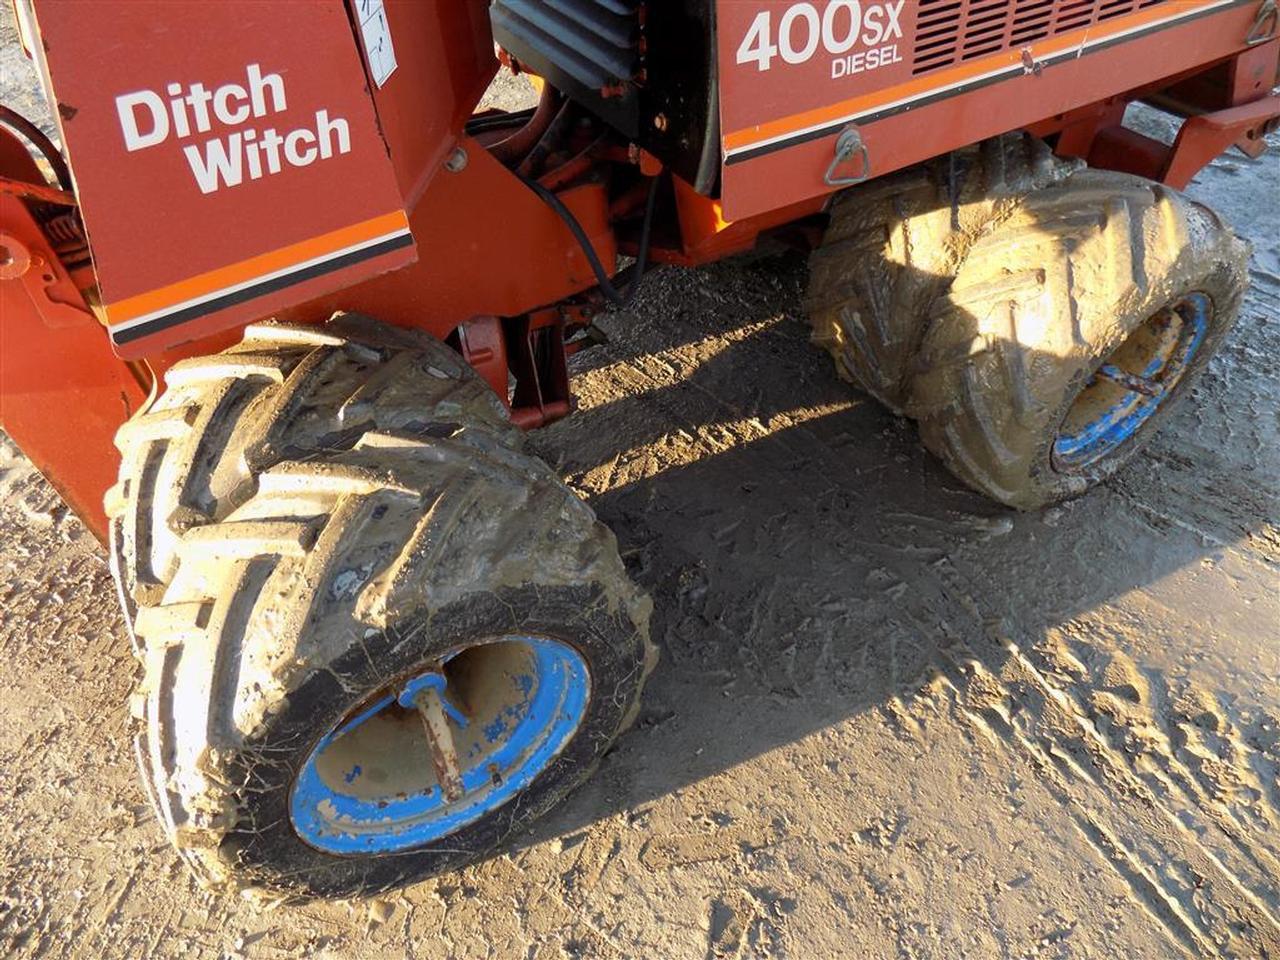 Ditch Witch 400 SX